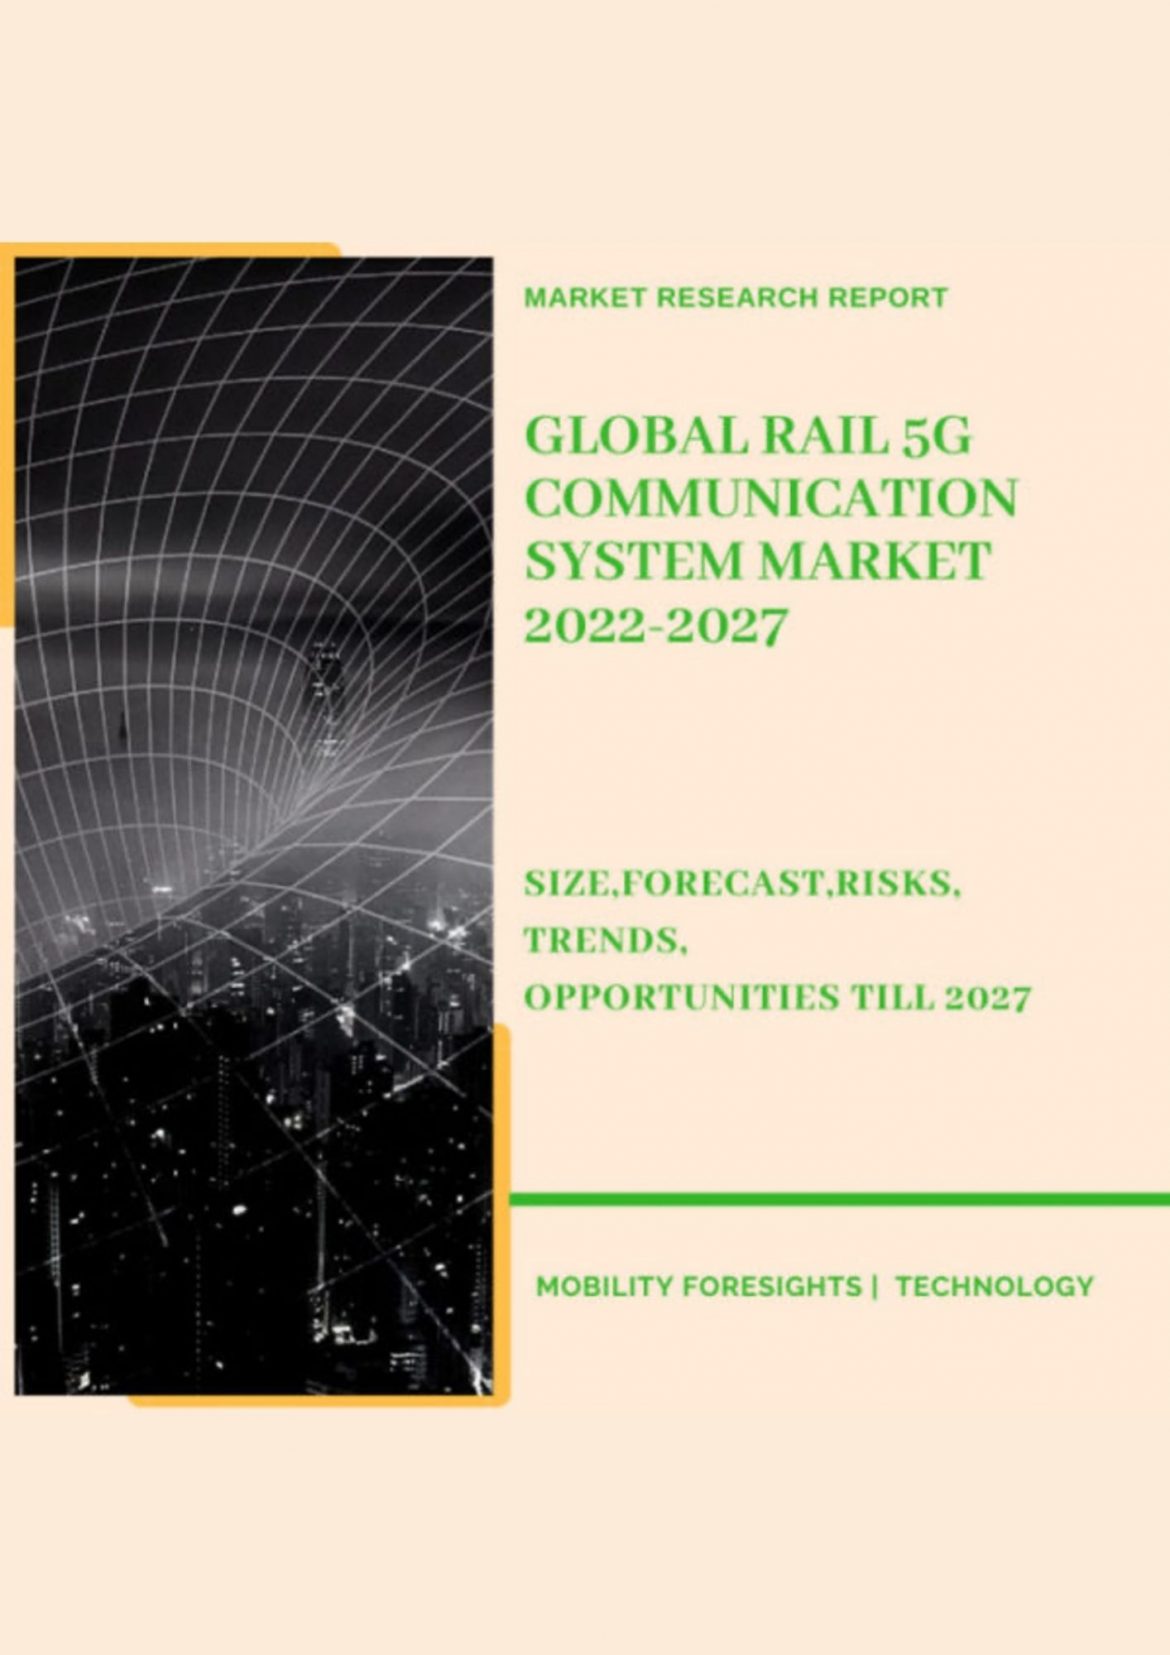 Global Rail 5g Communication System Market 2022-2027